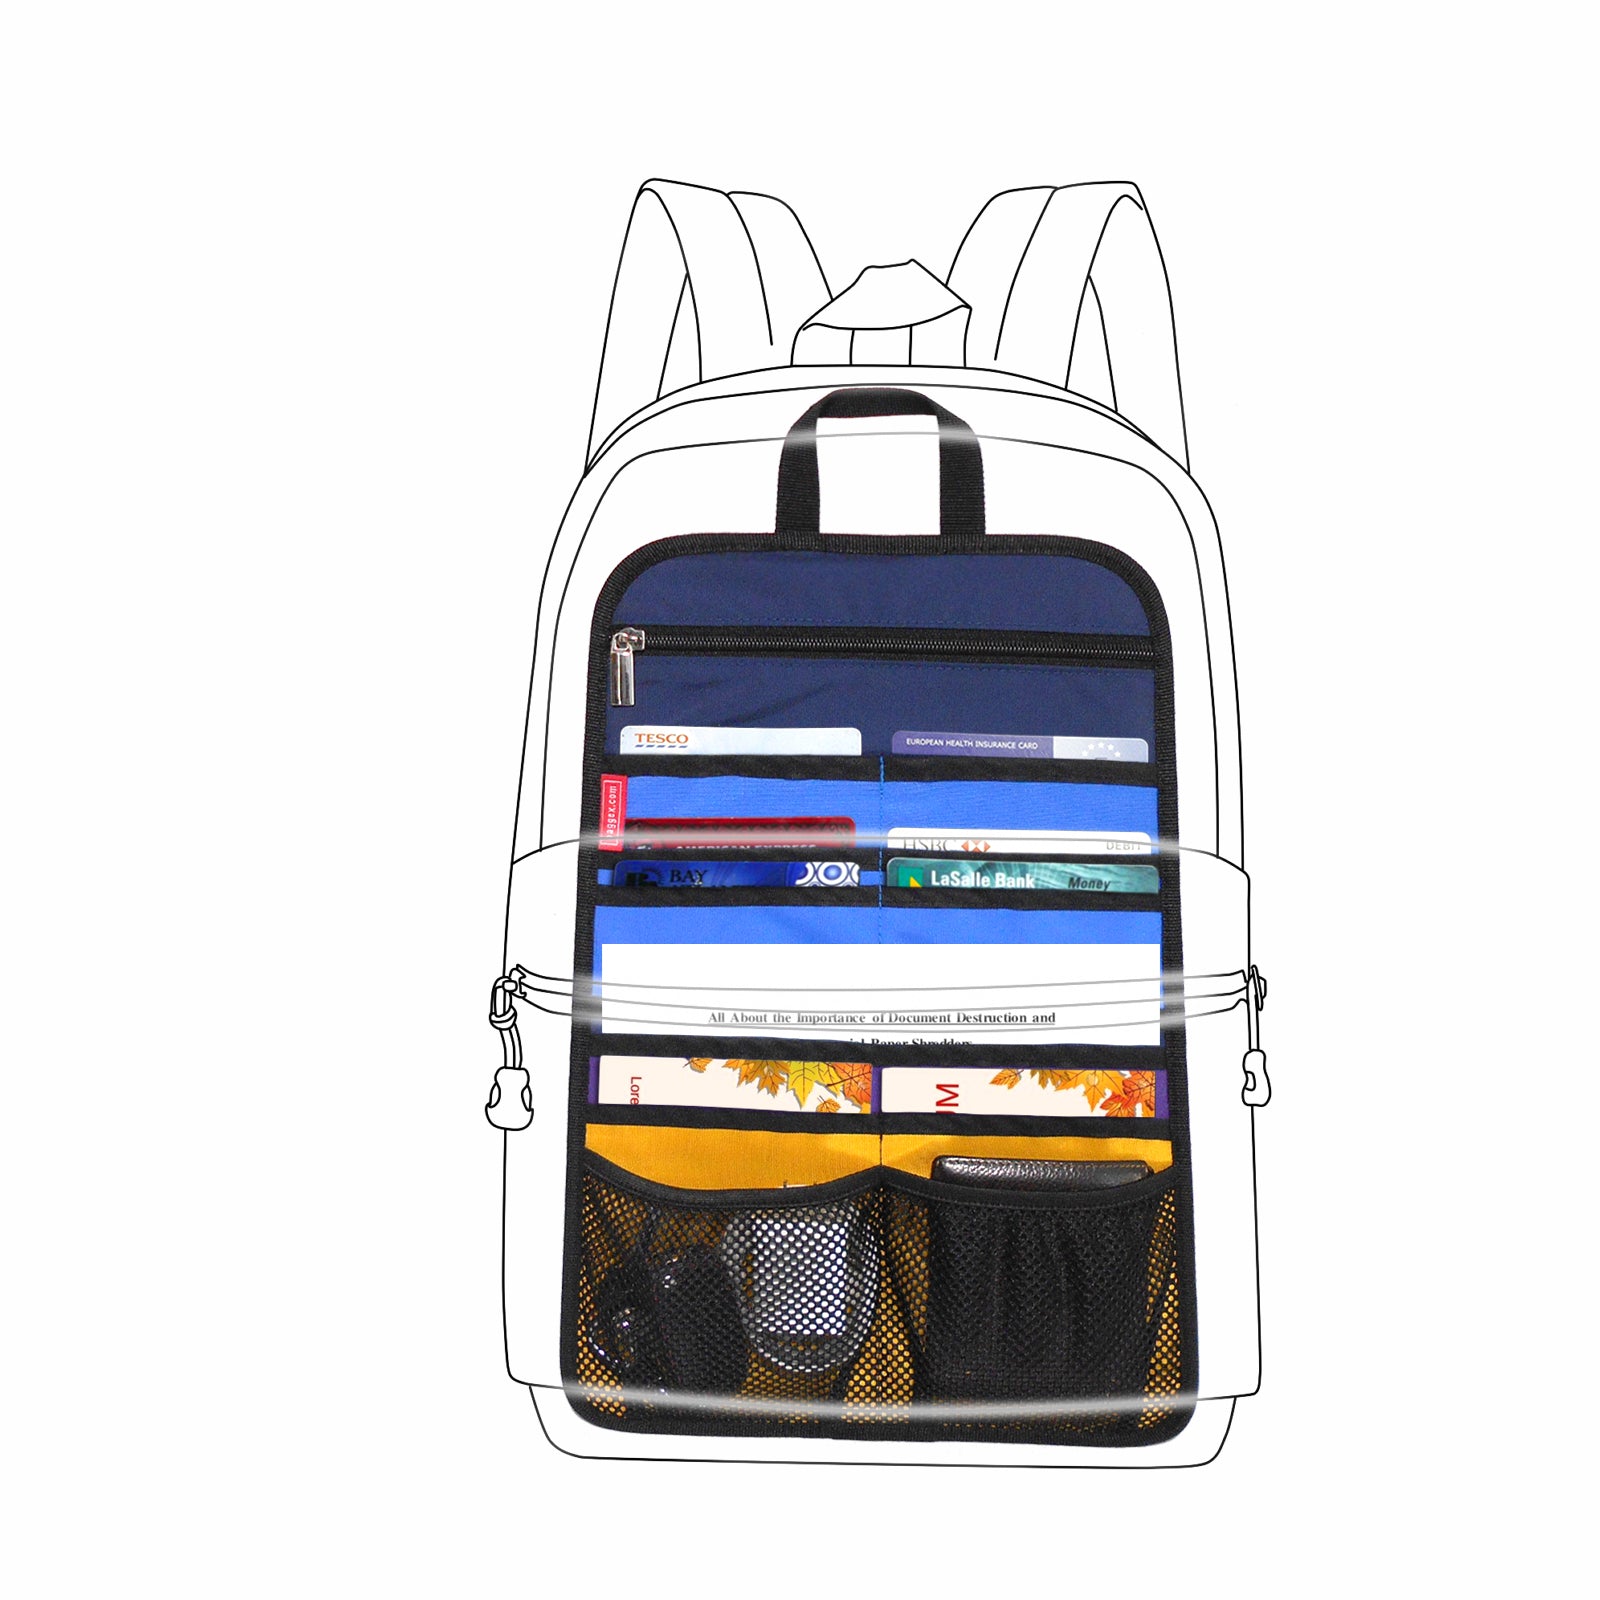 Backpack Organizer  Backpack organization, Backpacks, Backpack insert